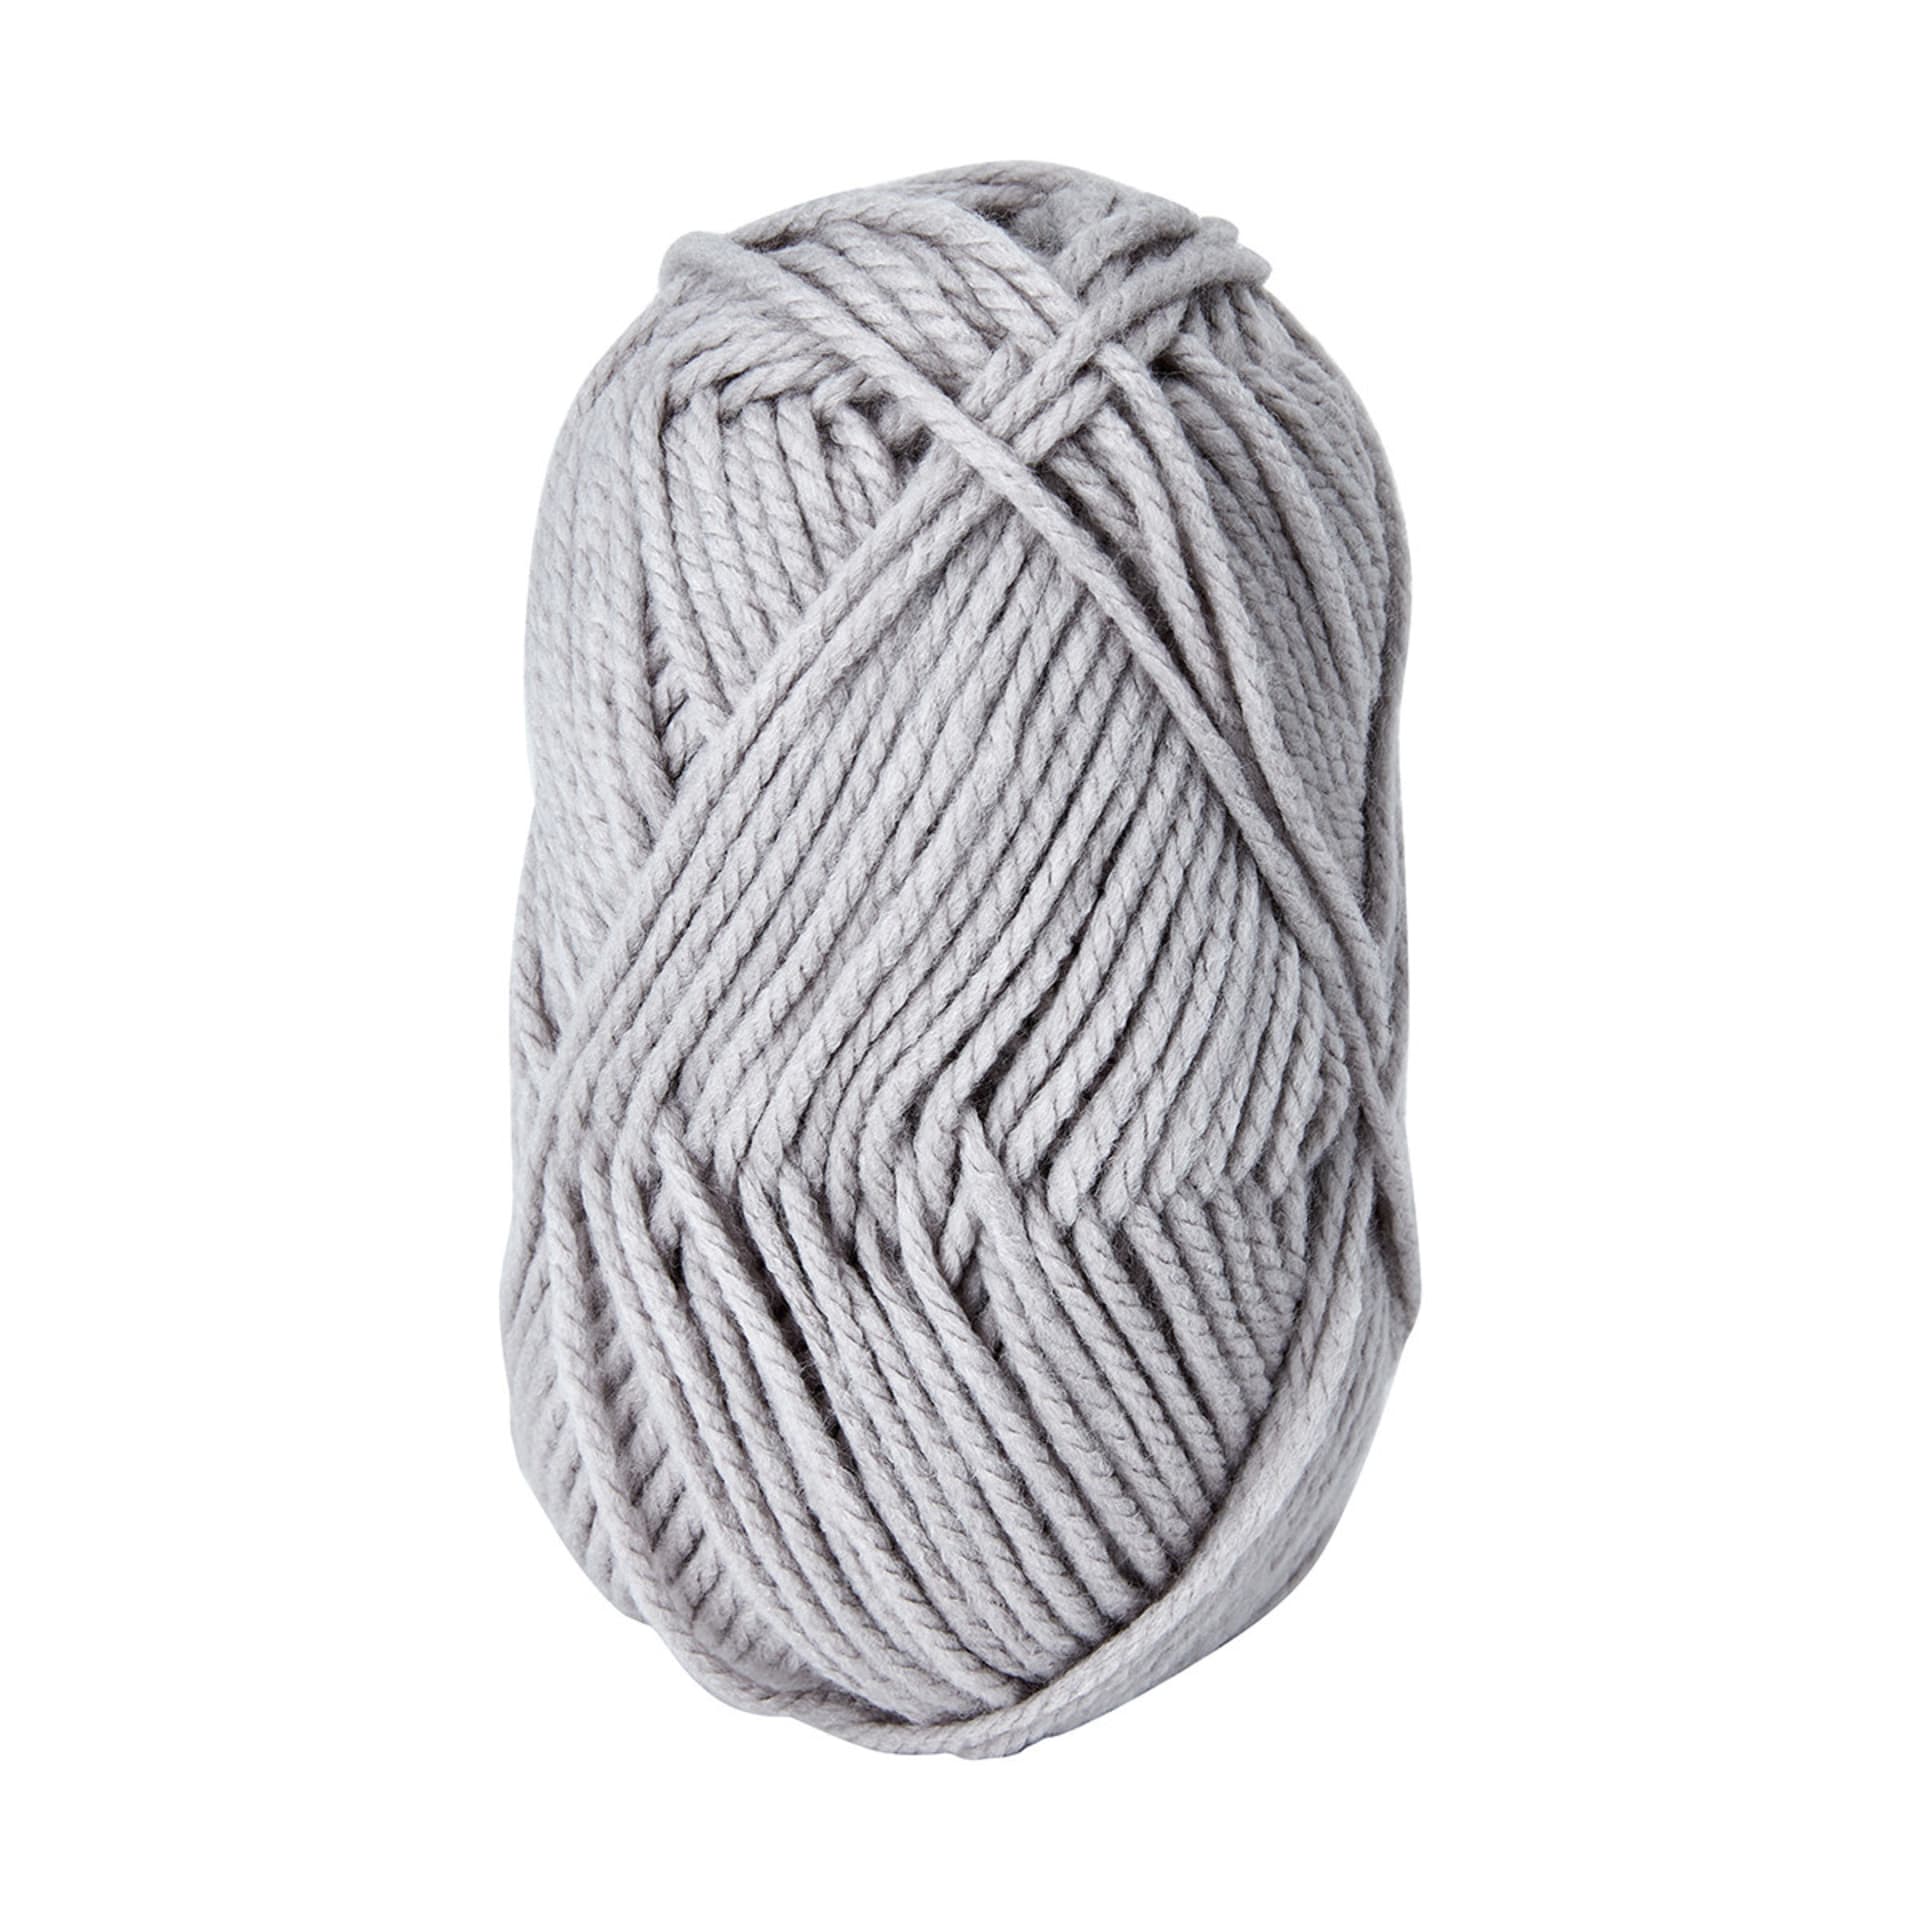 12 Ply Chunky Acrylic Yarn - Grey - Kmart